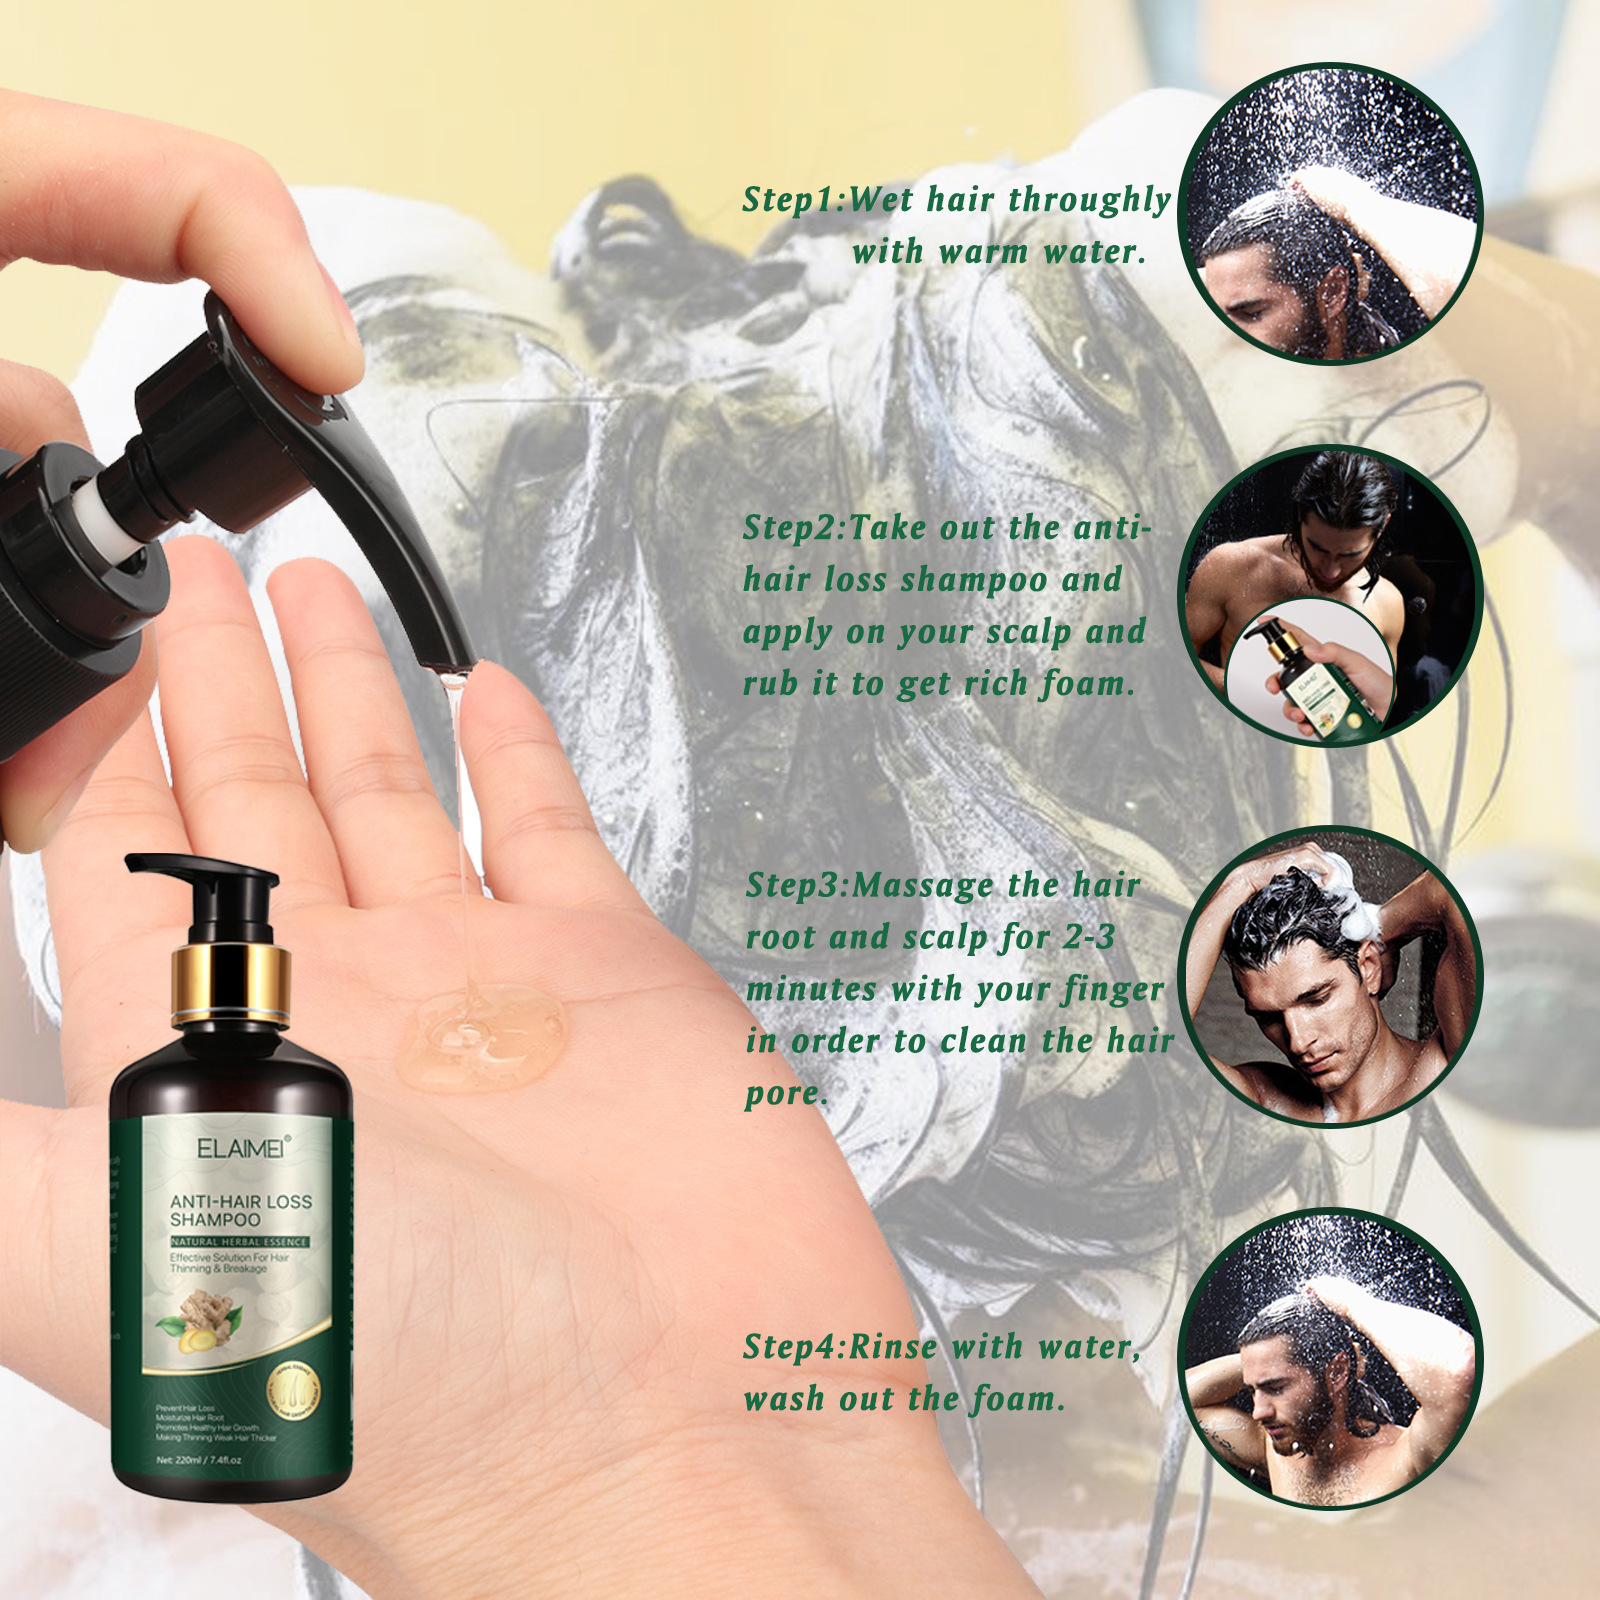 How to use anti hair loss shampoo